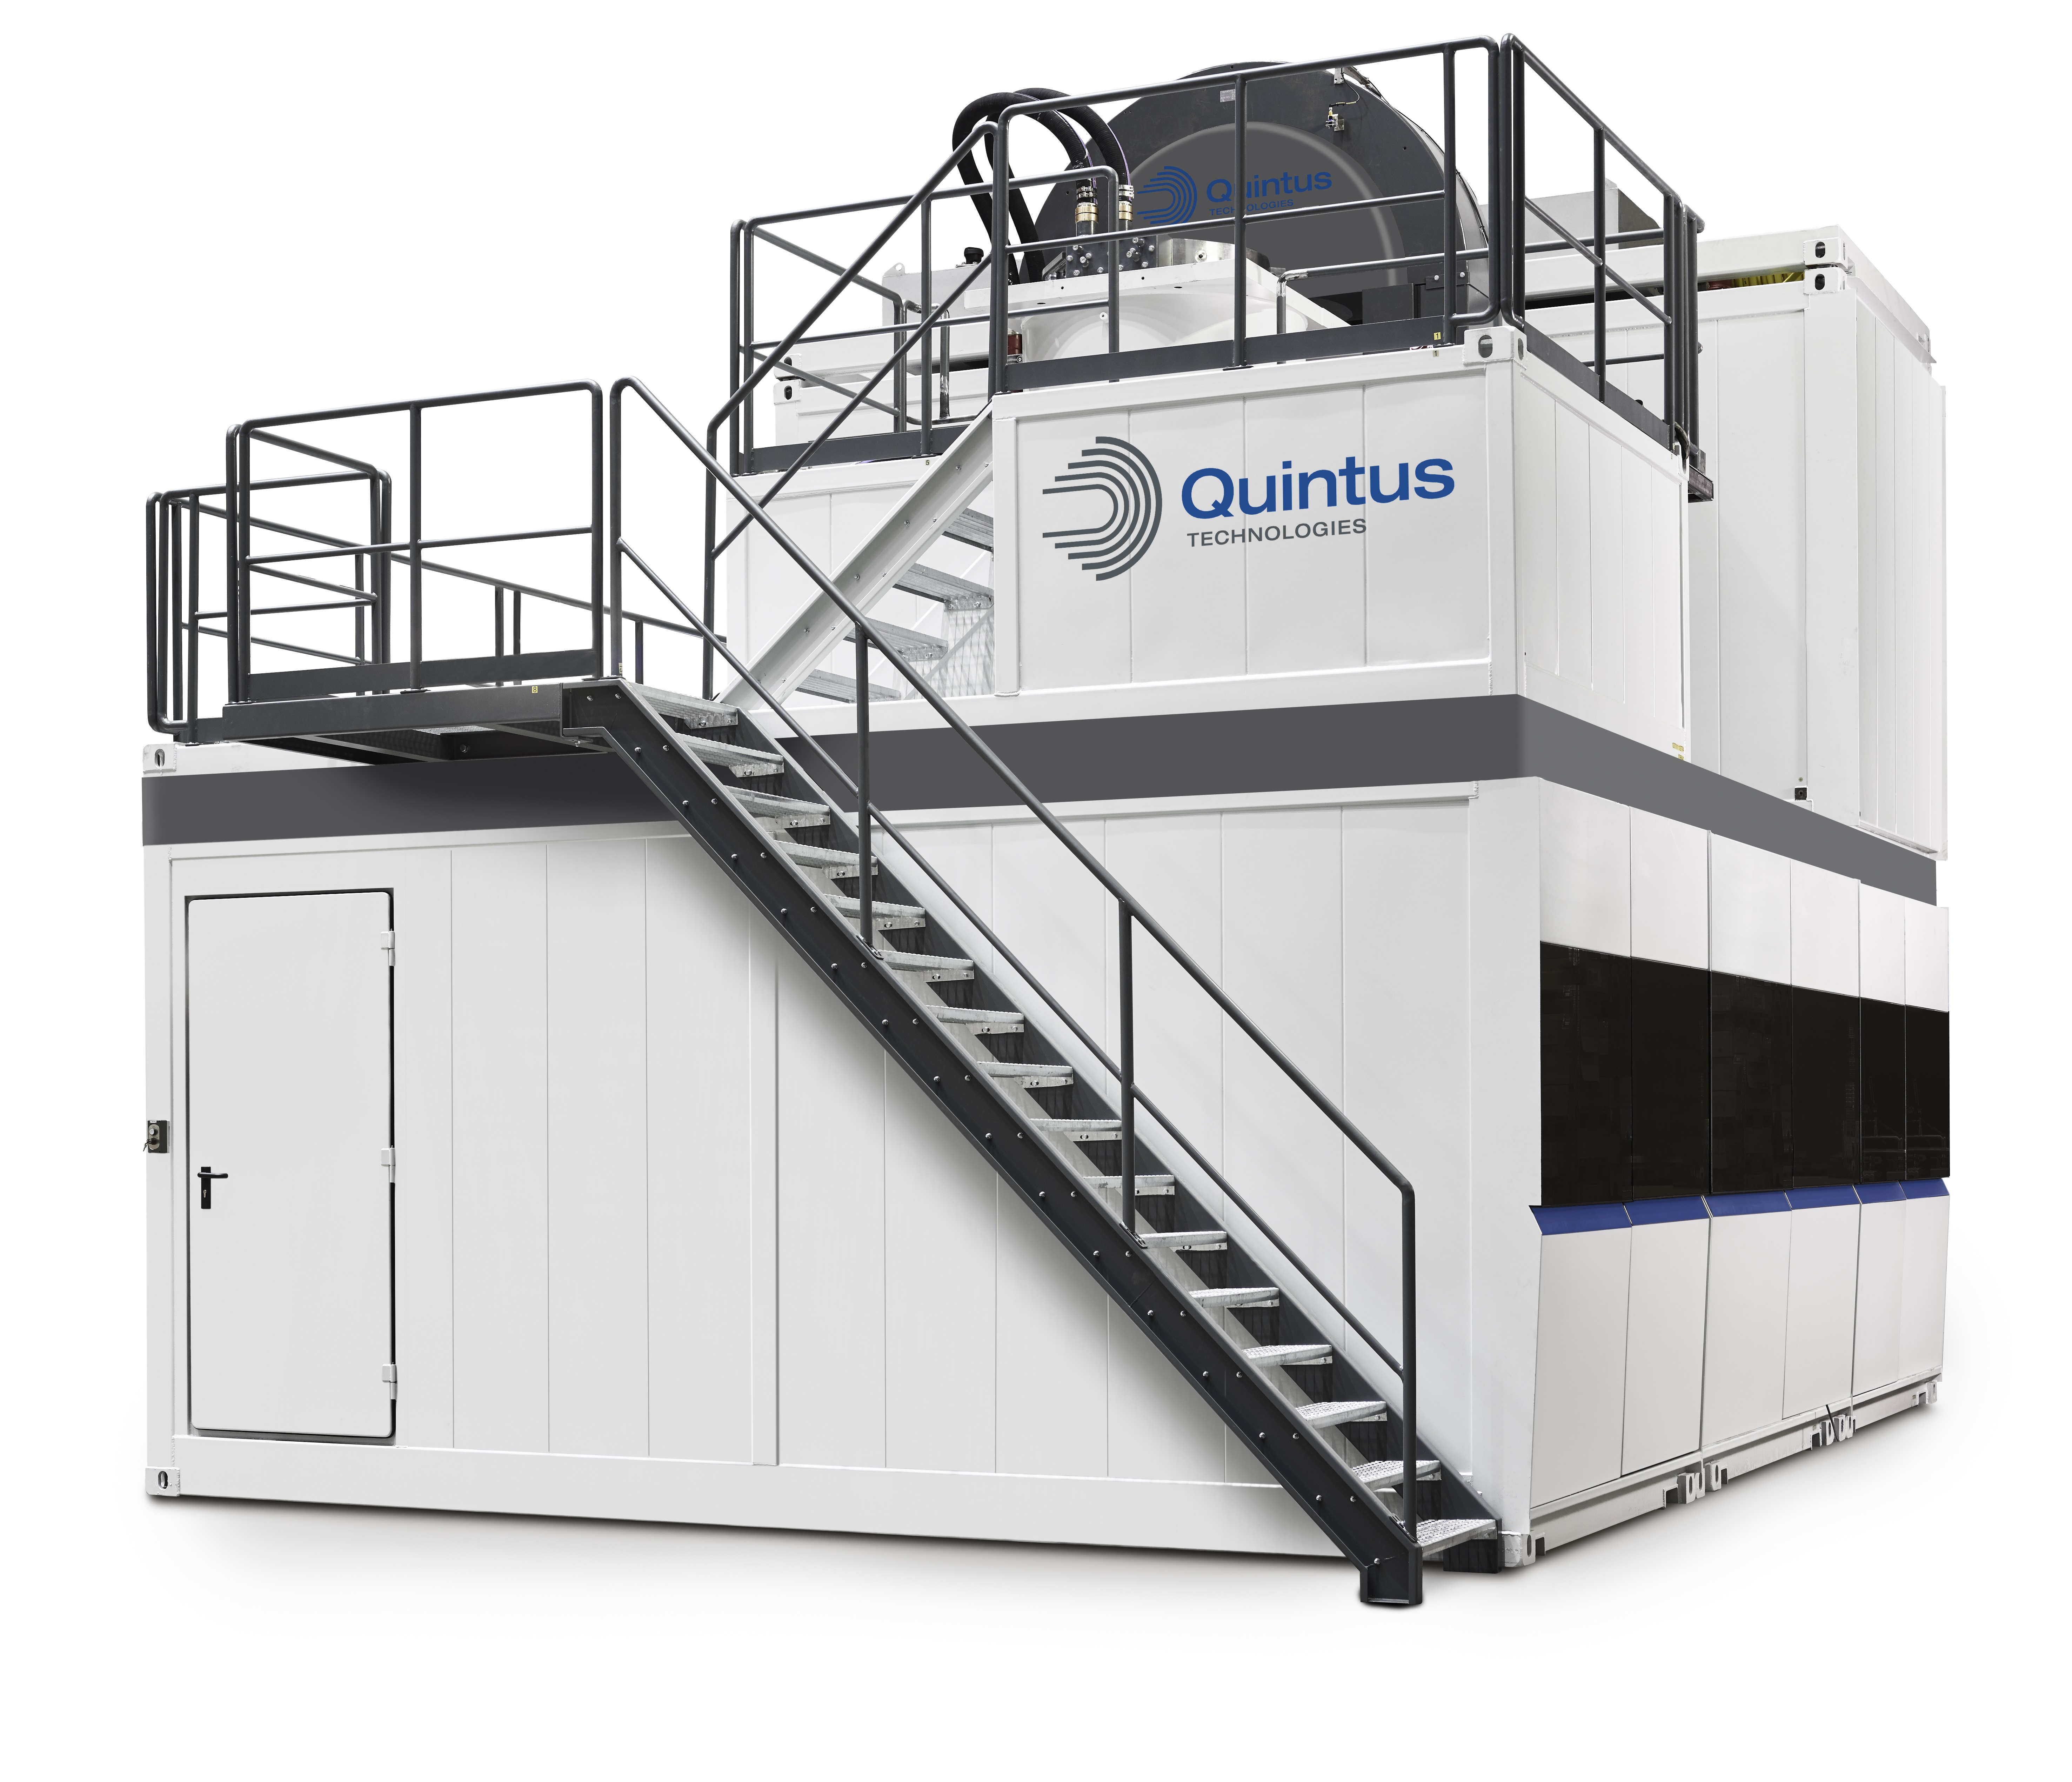 The QIH 122 URQ model press. (Photo courtesy Quintus Technologies.)